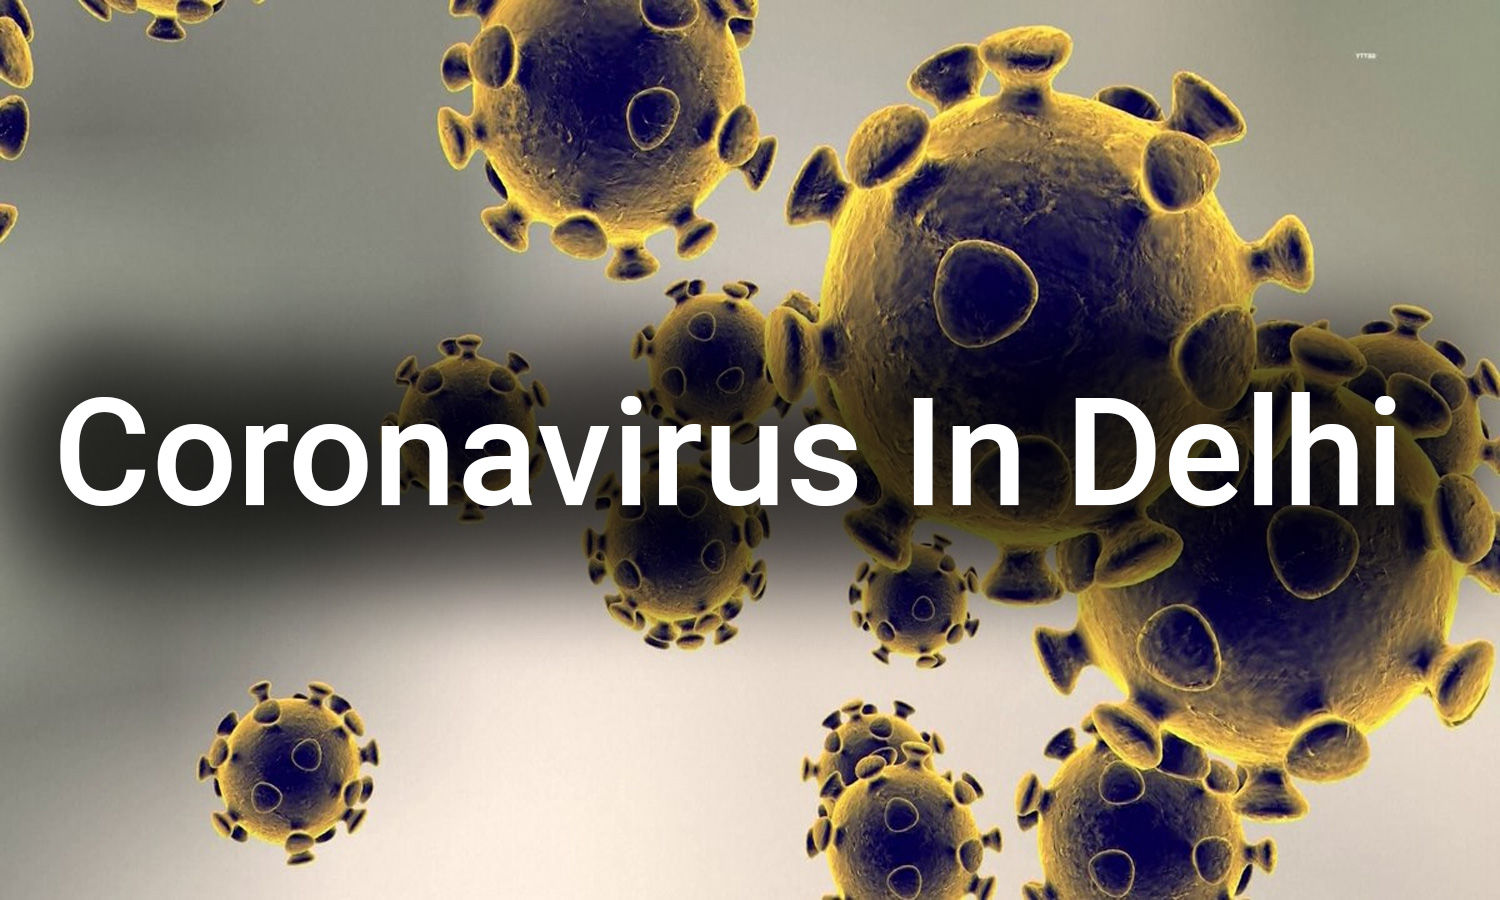 delhireports2423newinfectionsofcoronavirus